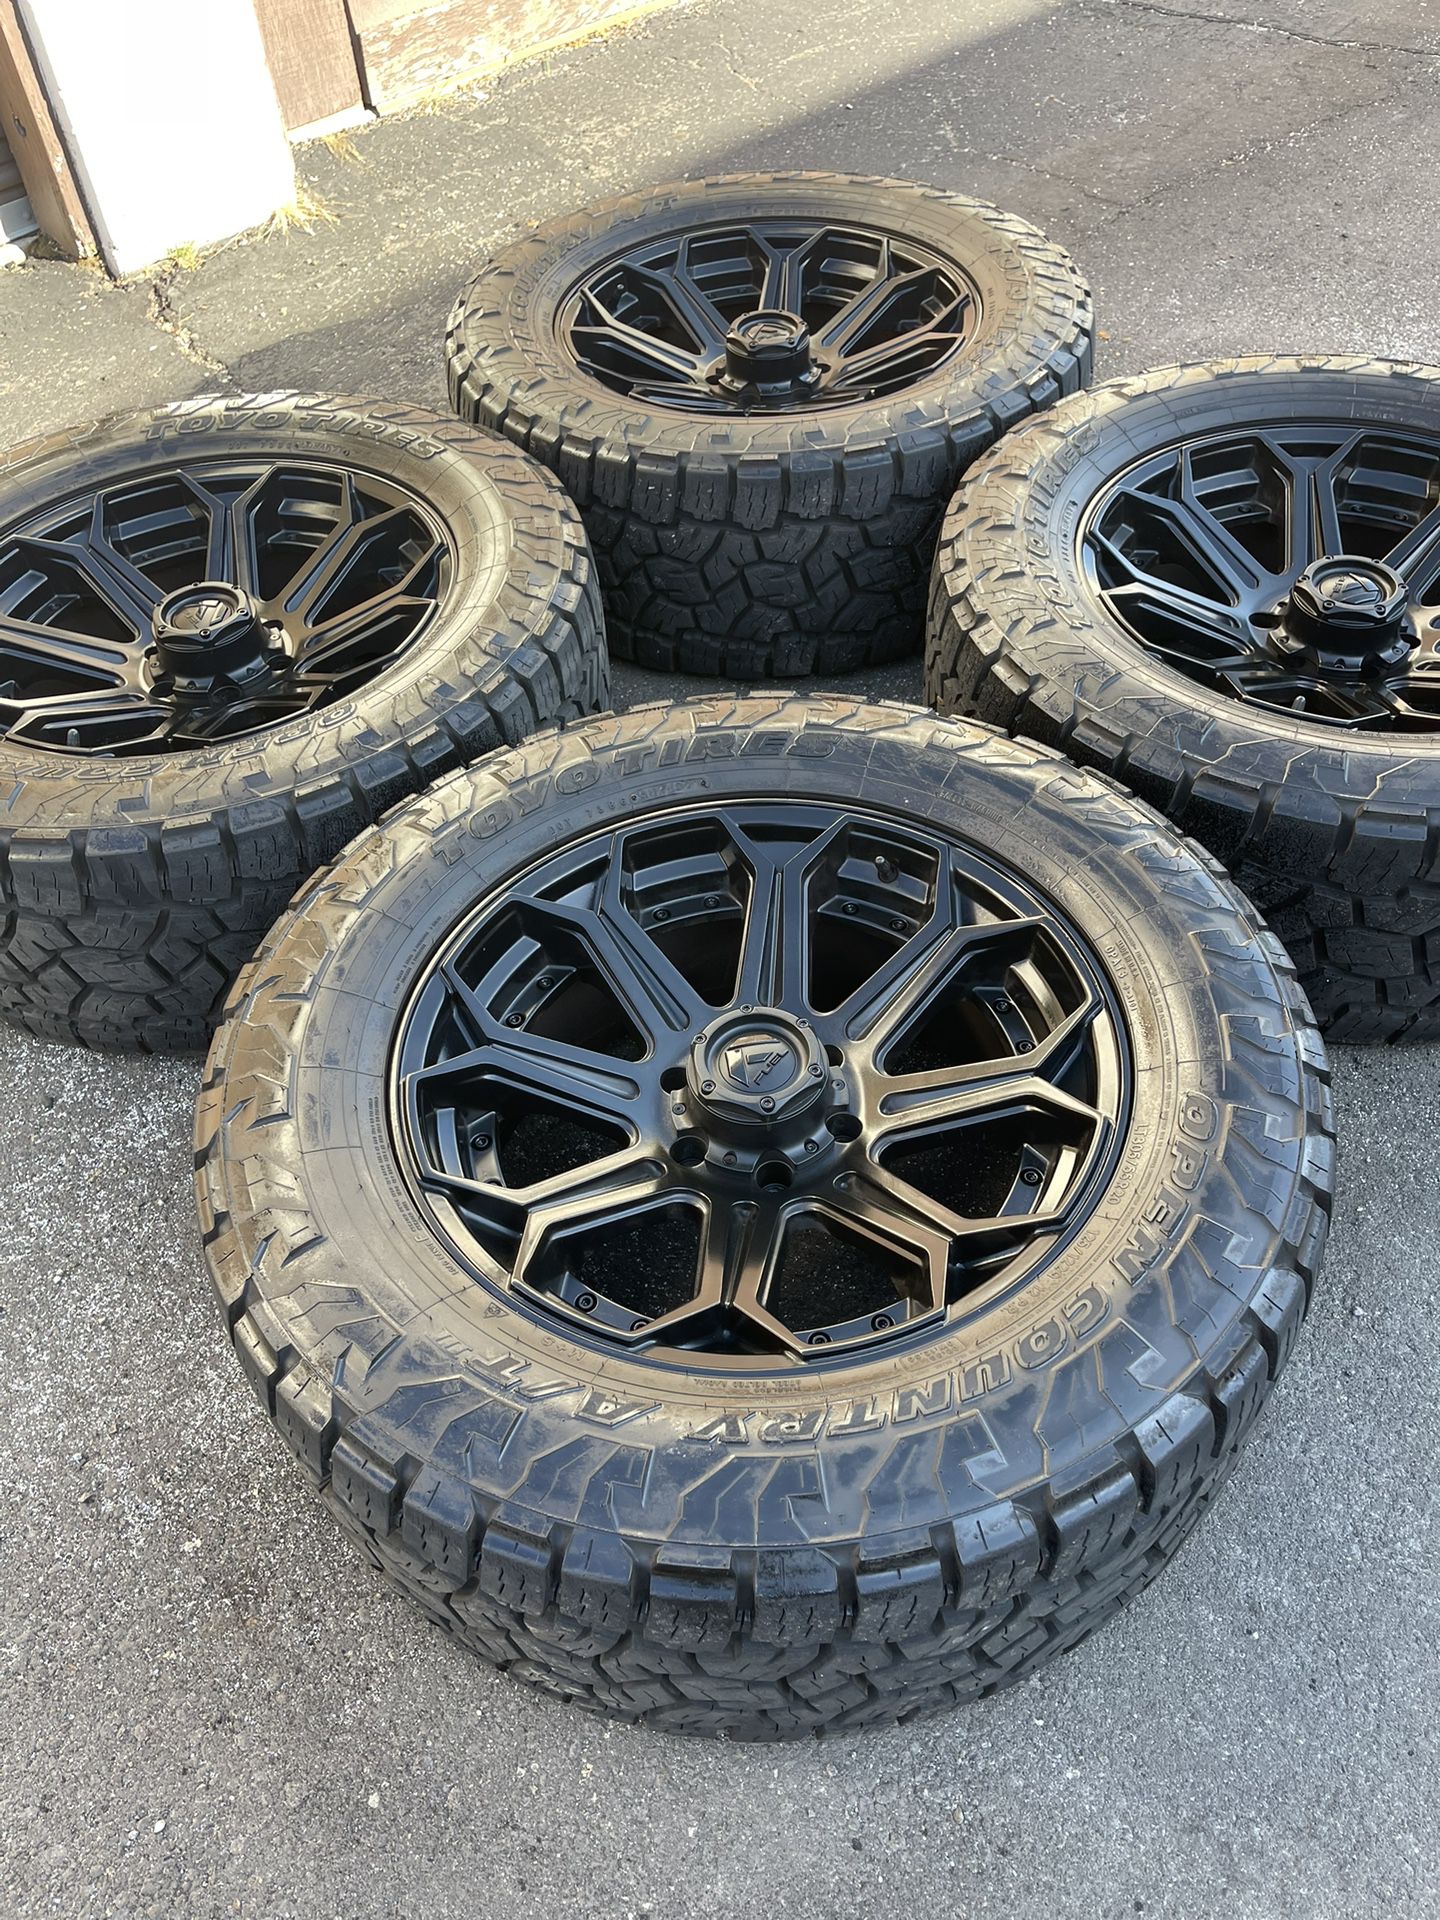 Fuel Siege 20” Wheels Matte Black w/ 33” Toyo AT3 Tires Rims Rines Tires 6-Lug  